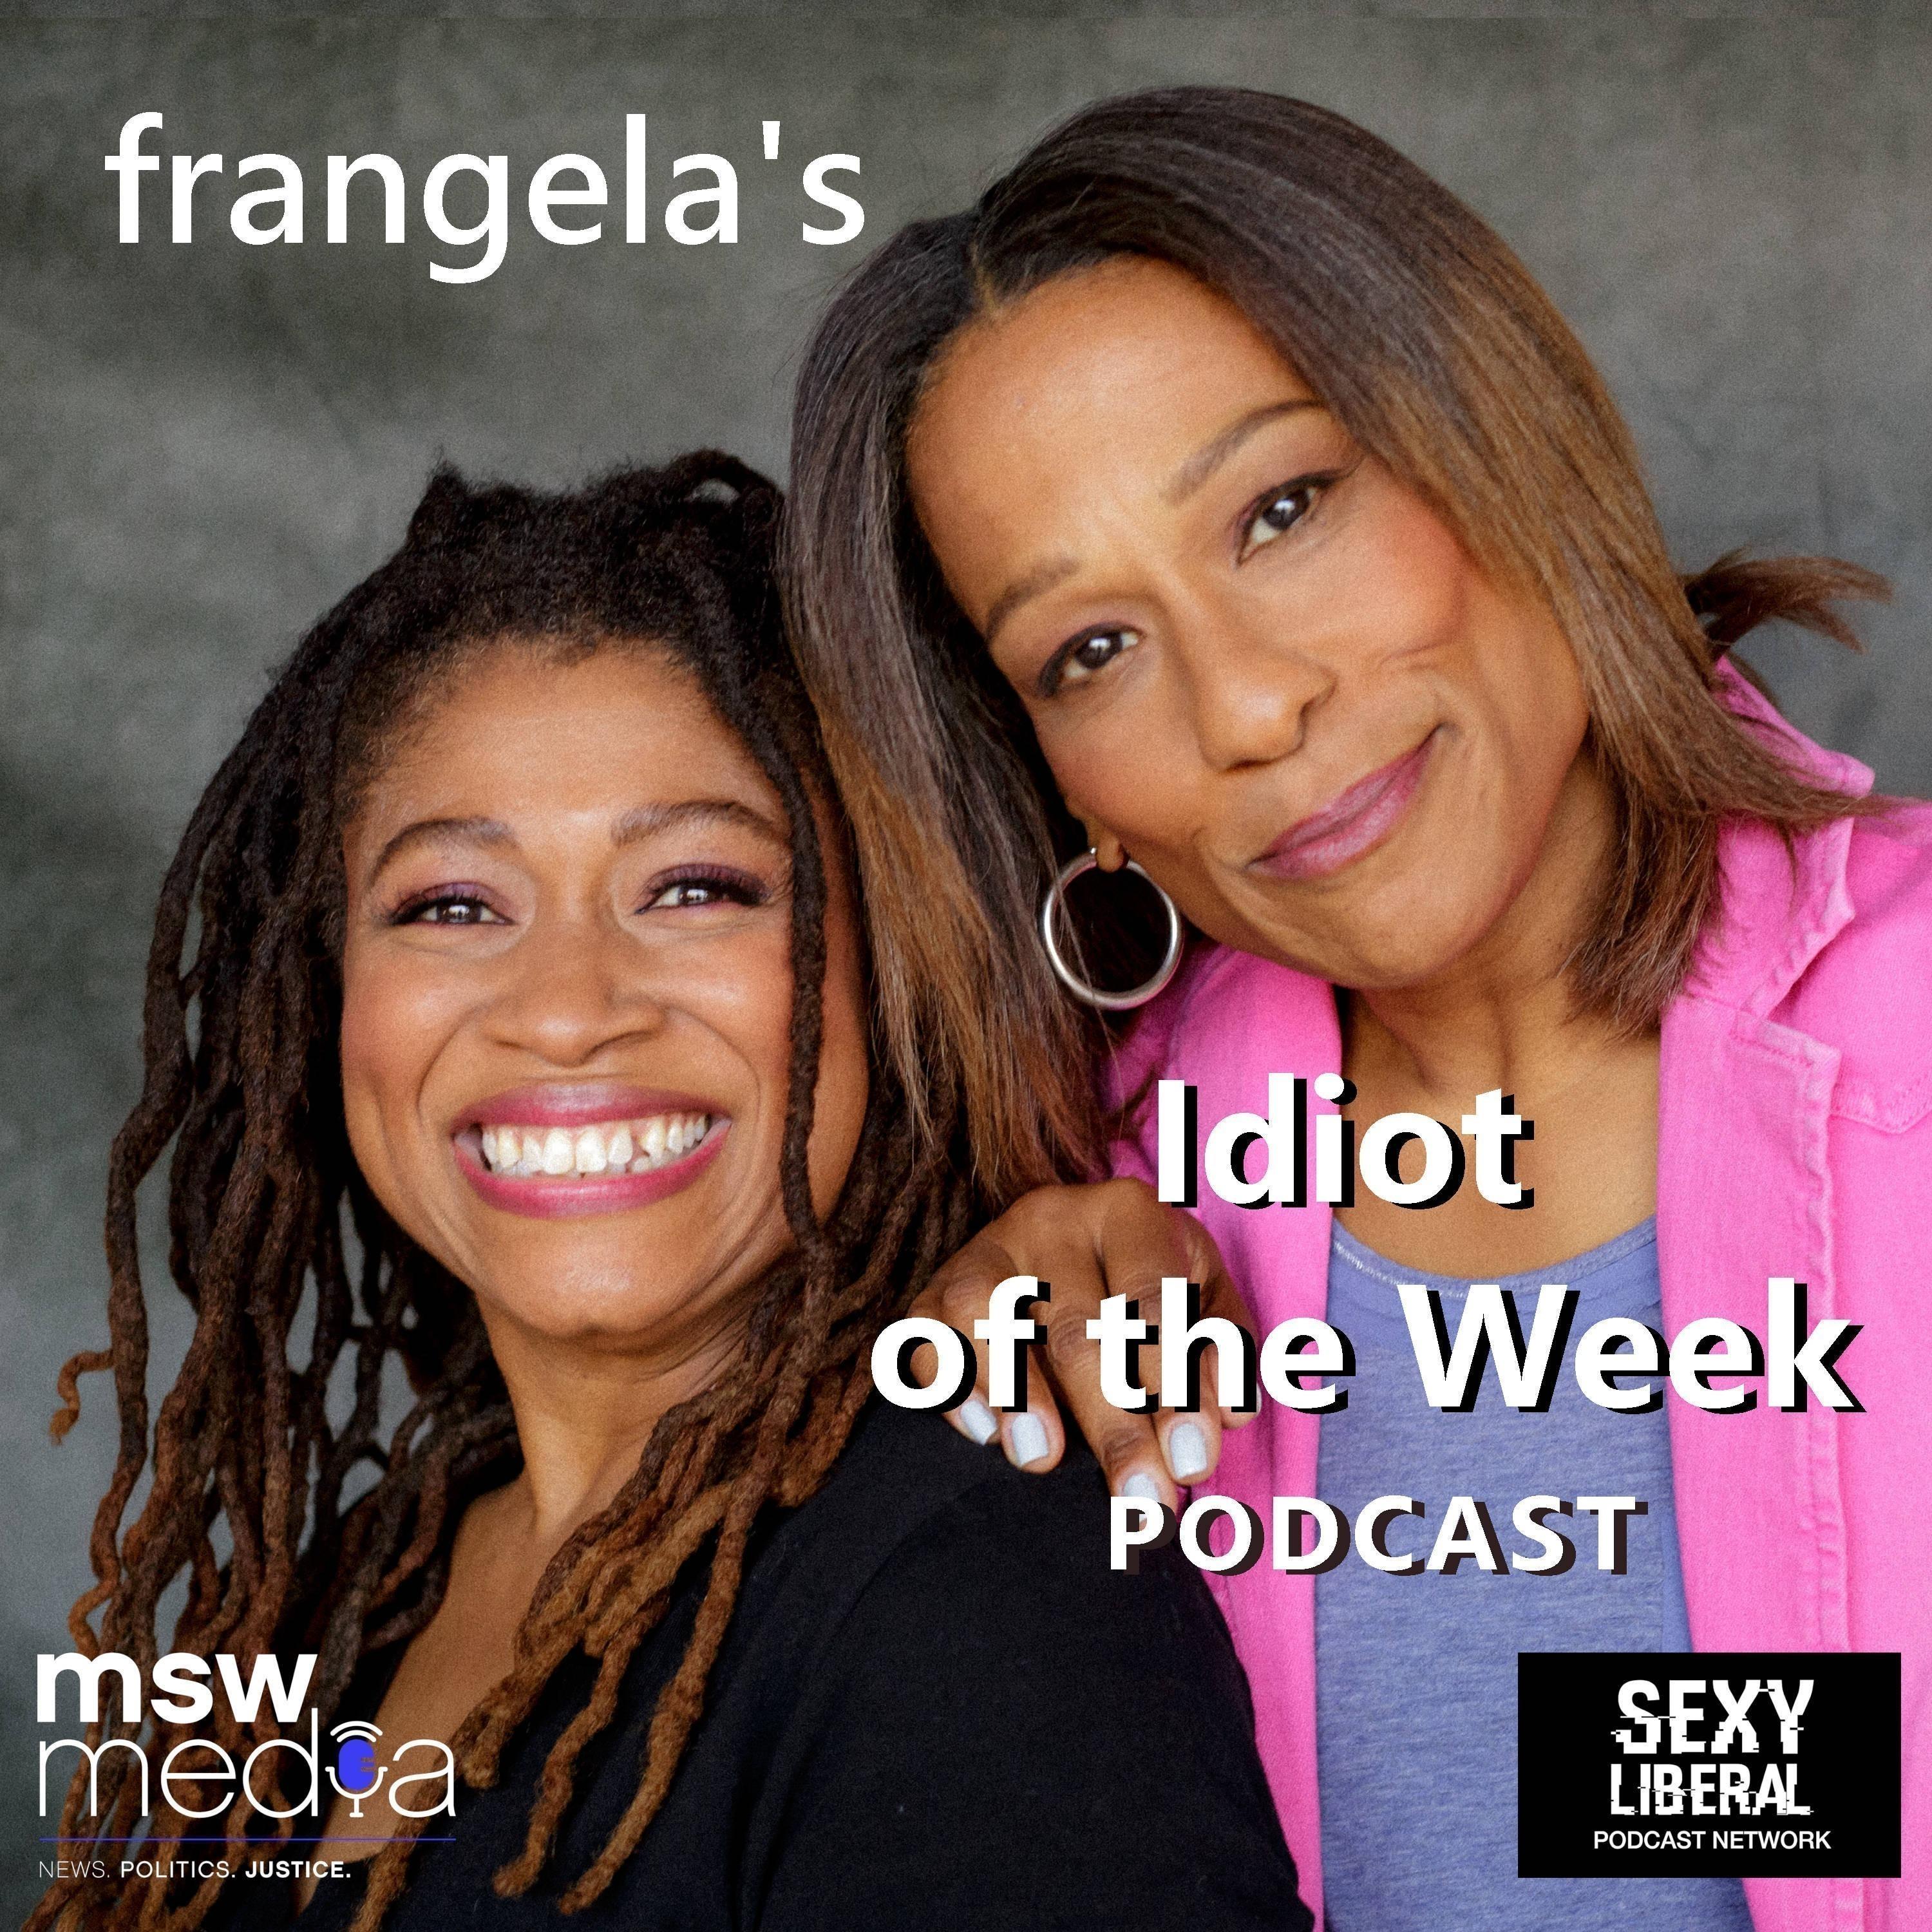 Frangela: Idiot of the Week